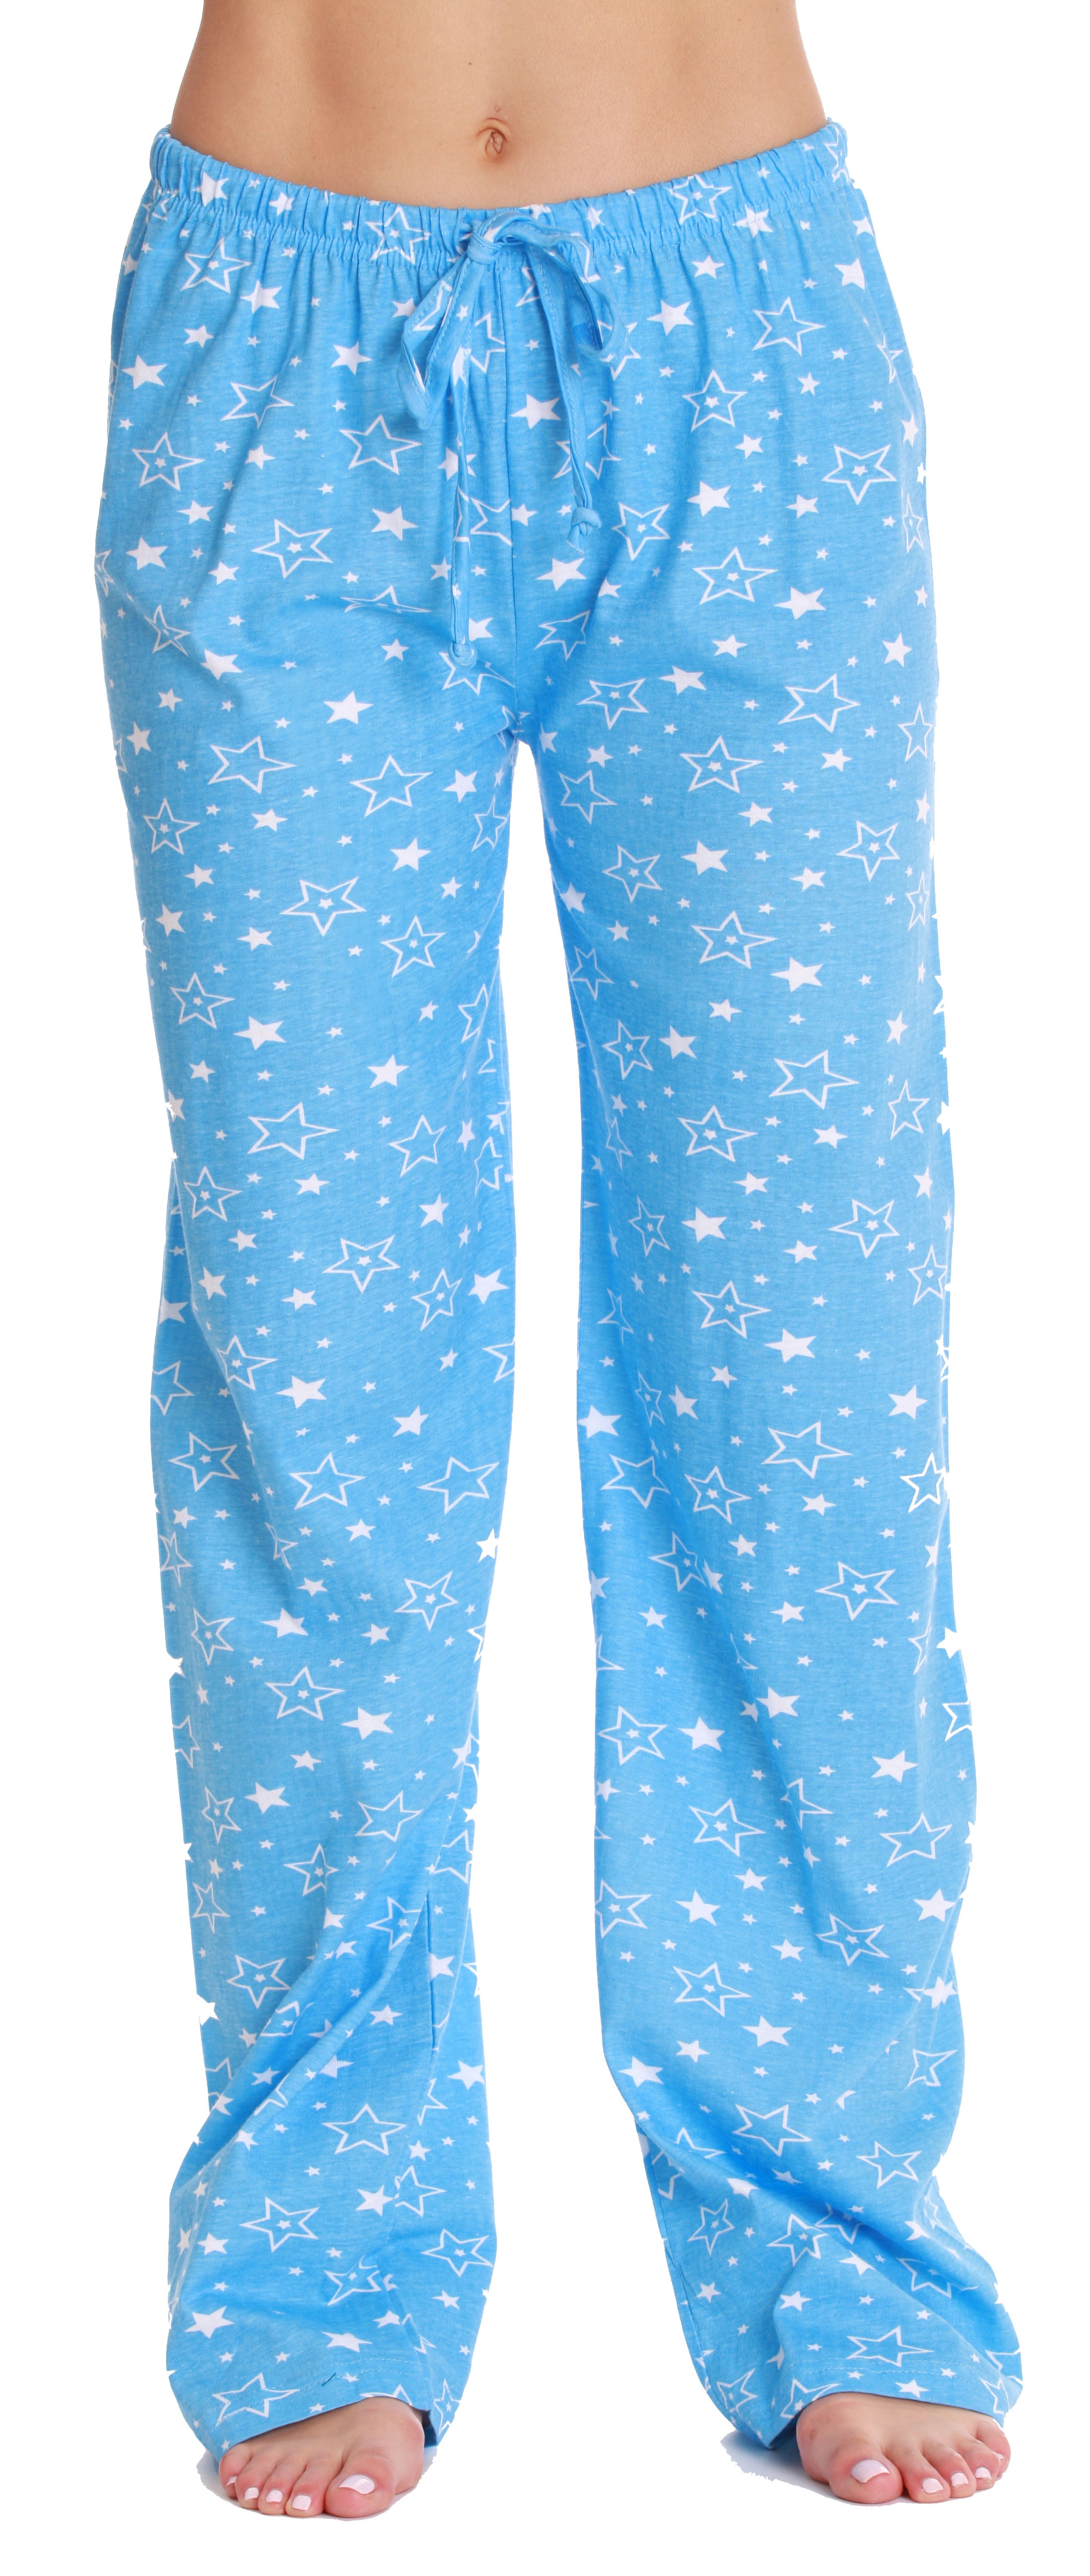 Just Love Plaid Women's Pajama Pants - Soft Sleepwear for Comfortable  Nights (Blue - Stars, Small) 